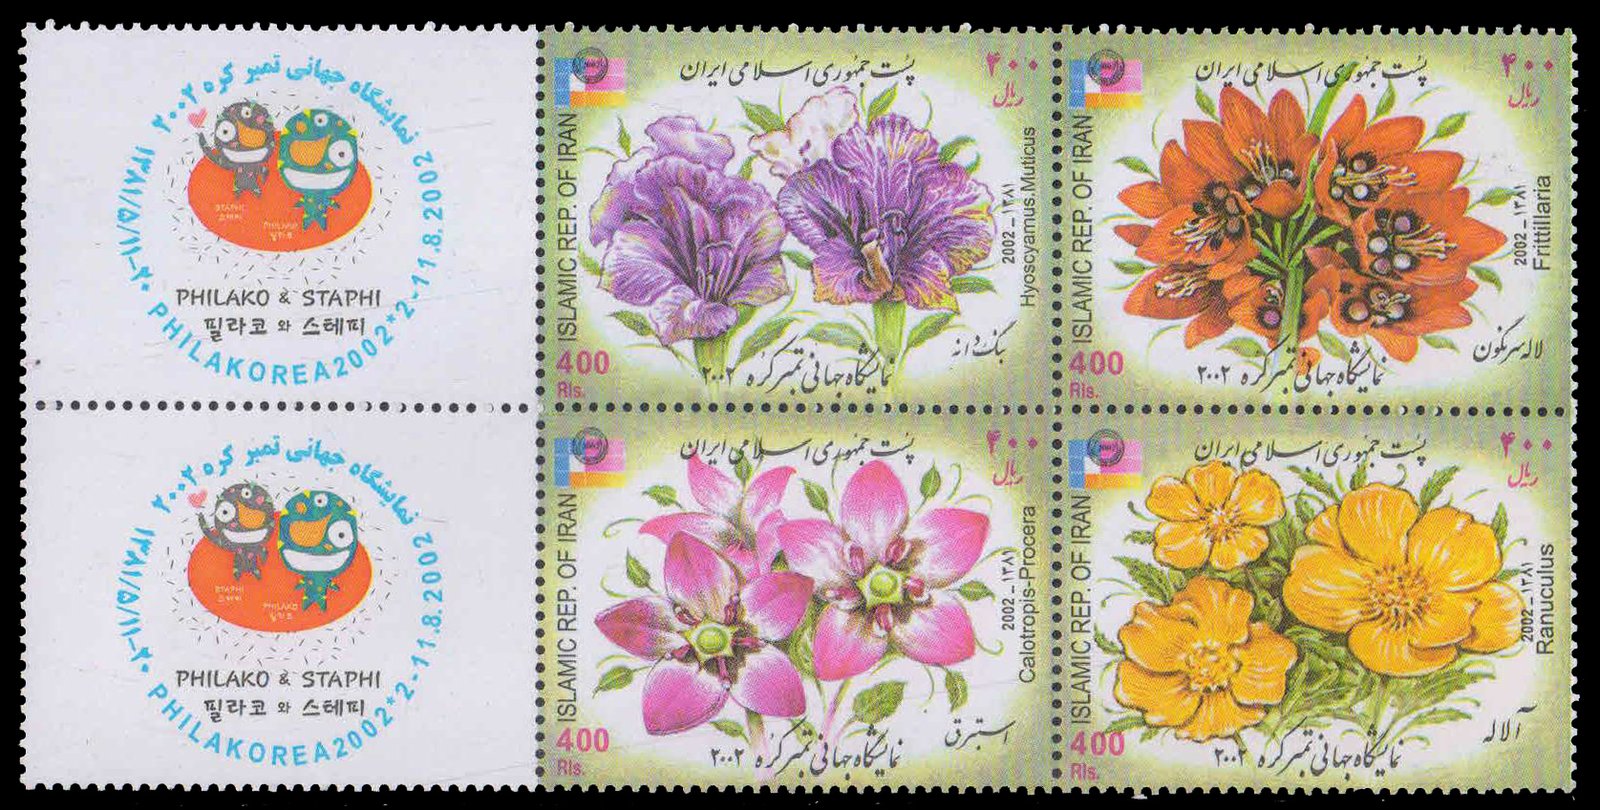 IRAN 2002-Flowers, Philakorea 2002, Int. Stamp Exhibition, Block of 4, MNH, S.G. 3086-3089